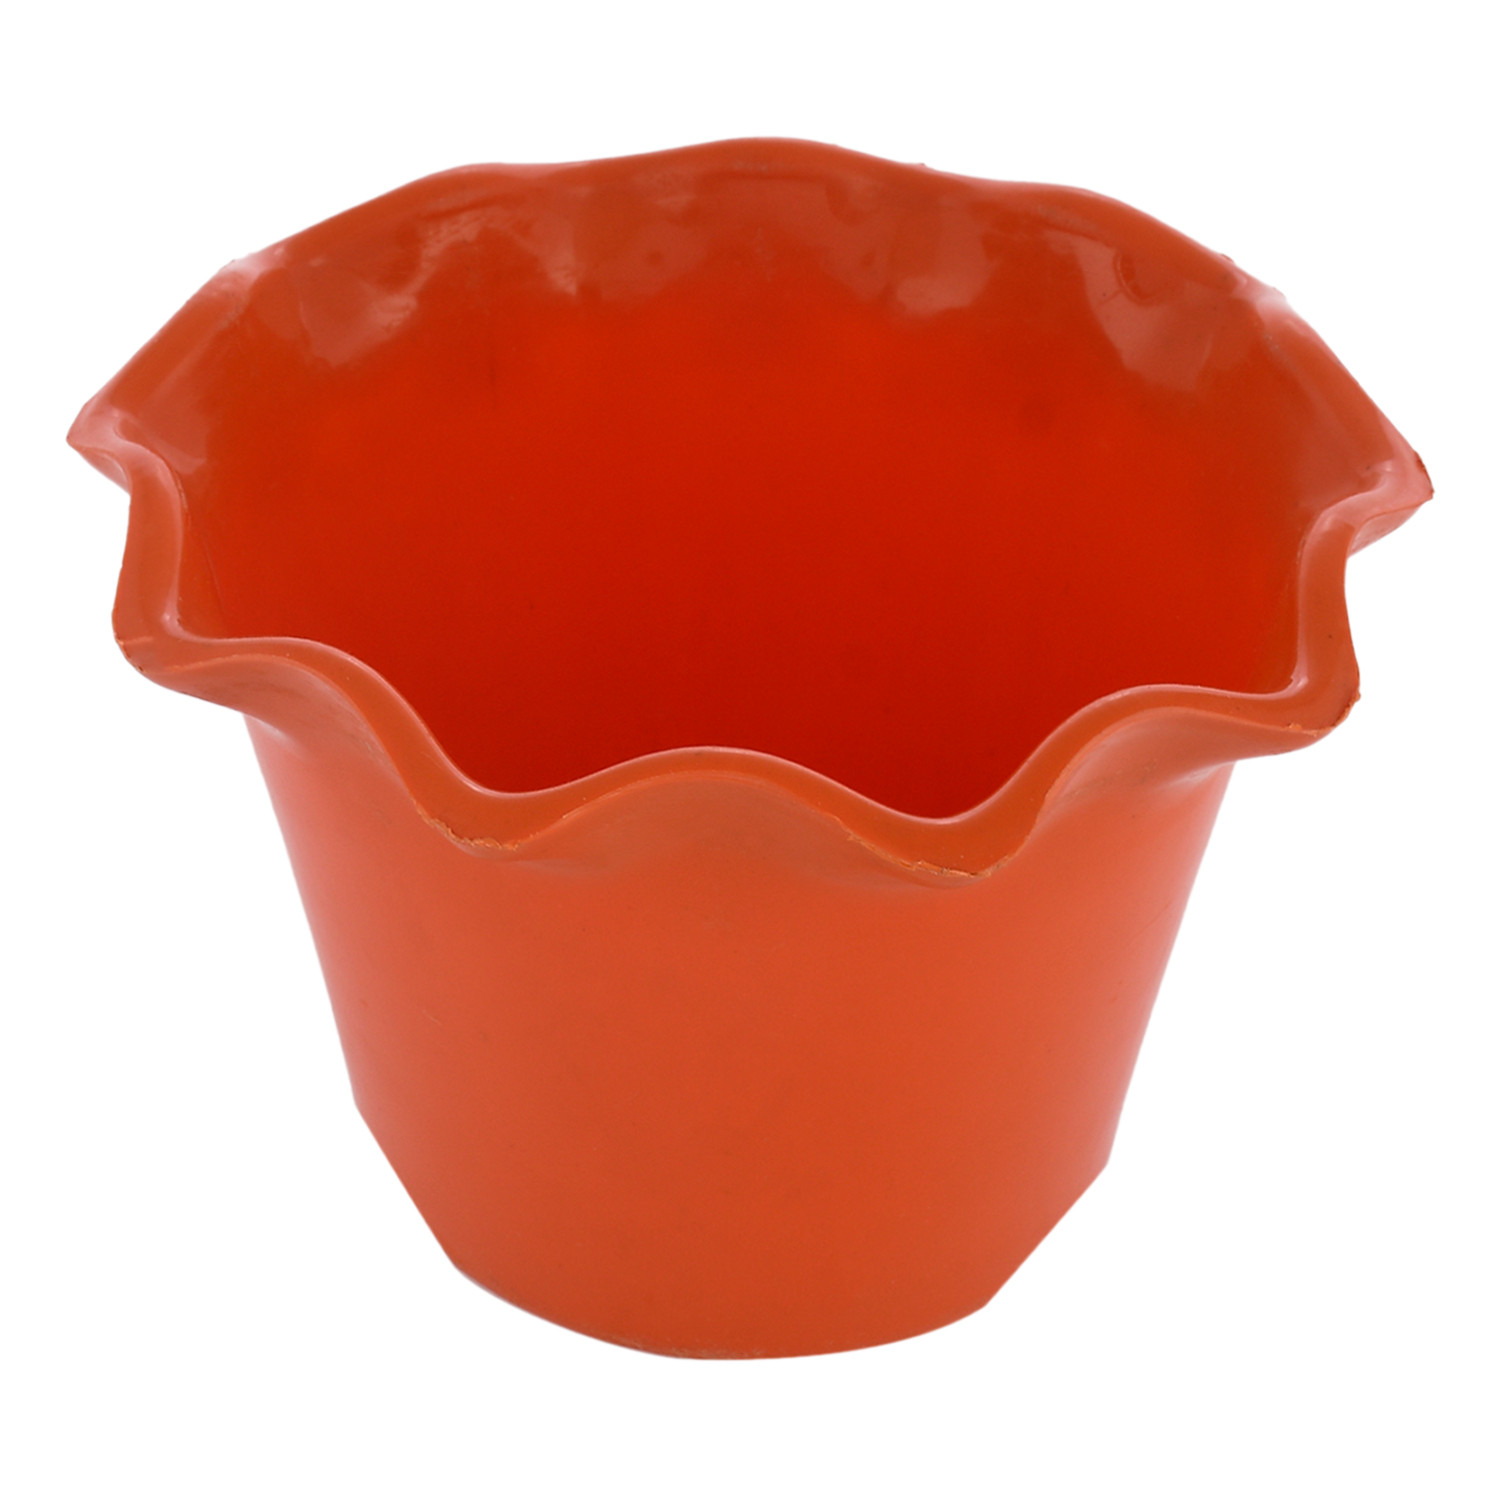 Kuber Industries Blossom Flower Pot|Durable Plastic Flower Pots|Planters for Home Décor|Garden|Living Room|Balcony|Pack of 2 (Orange & Green)